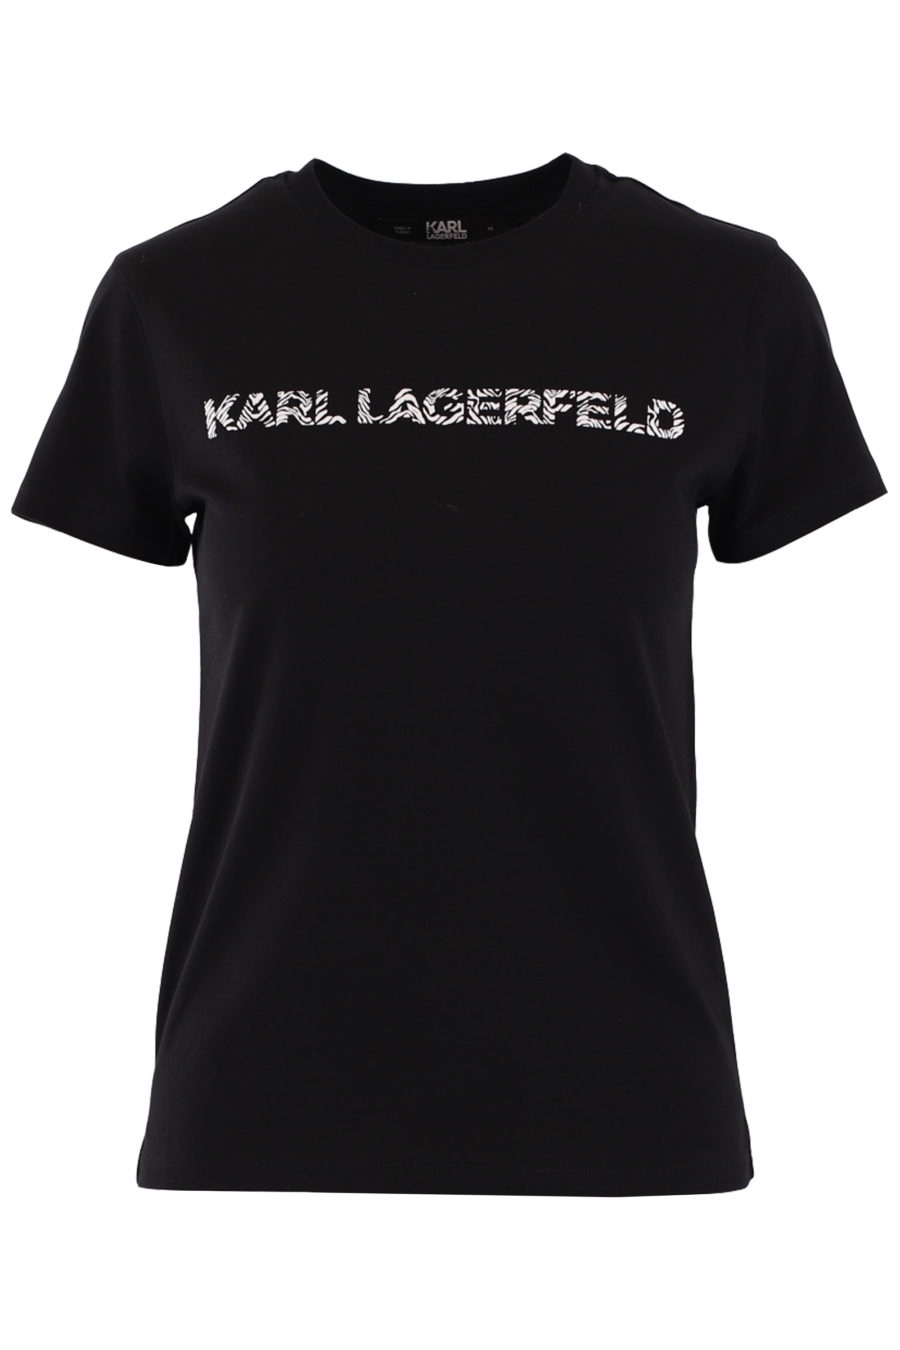 T-shirt noir avec logo zébré - IMG 9015